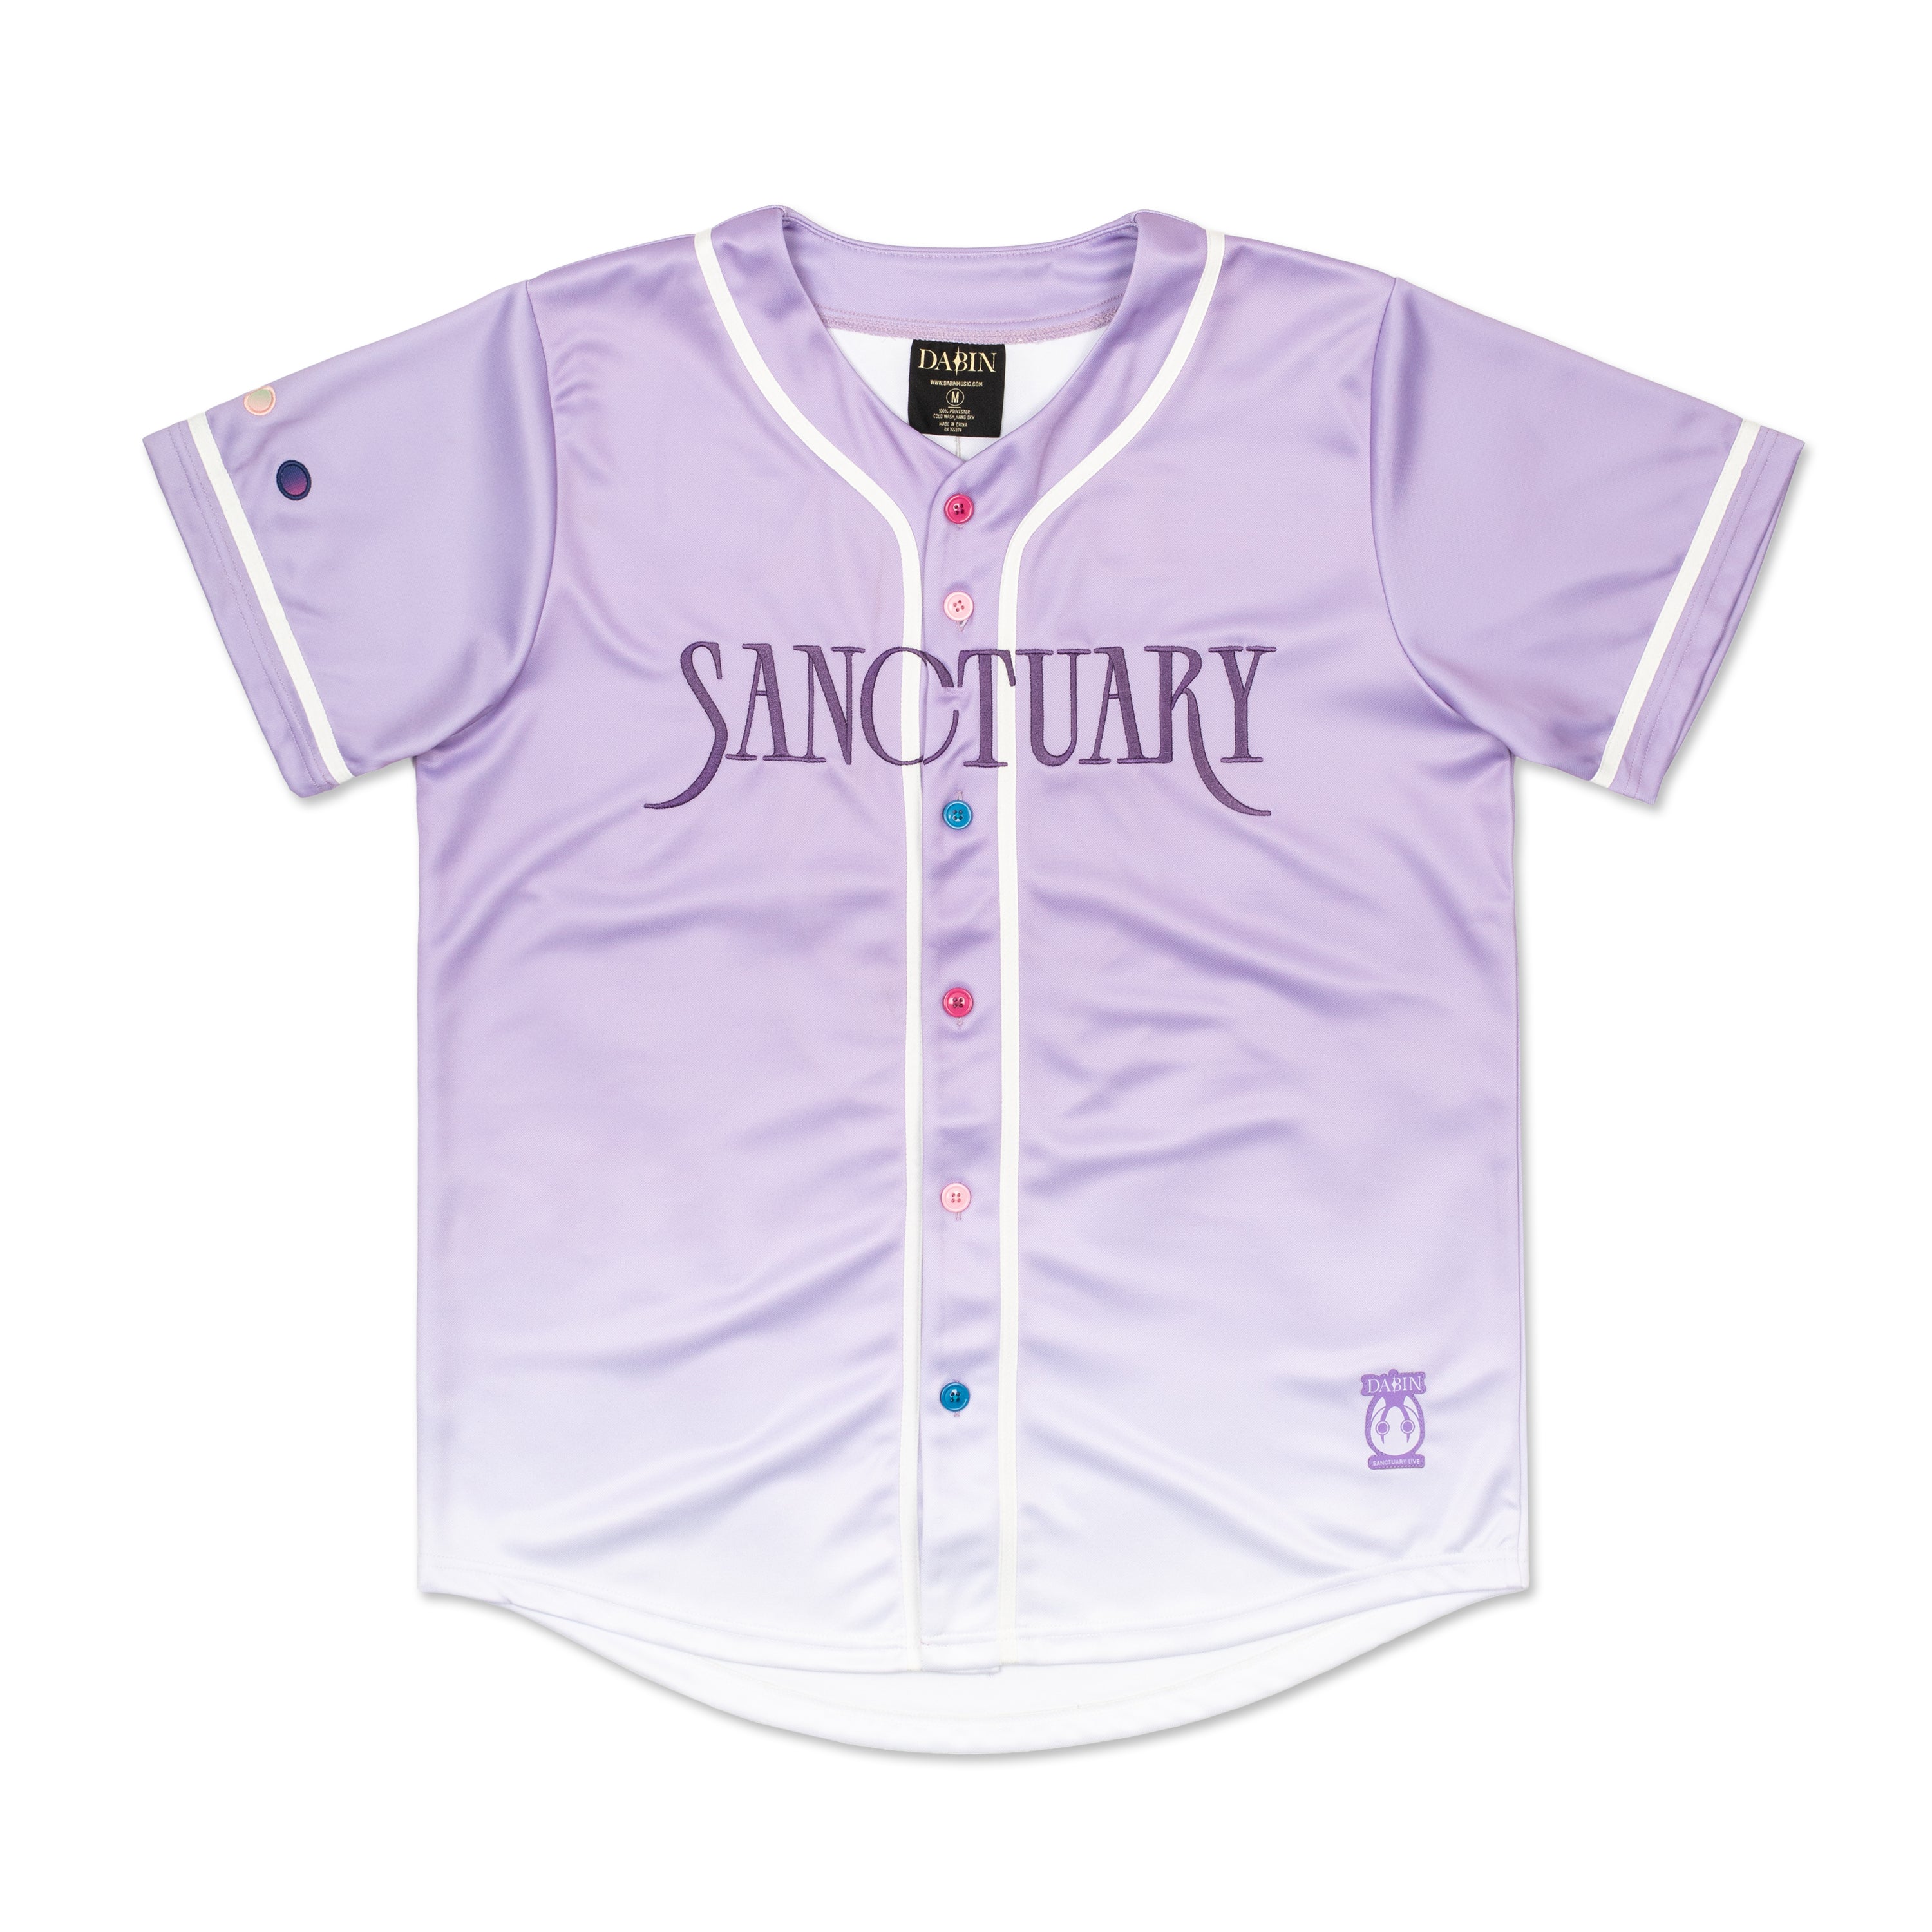 Dabin - Sanctuary Baseball Jersey